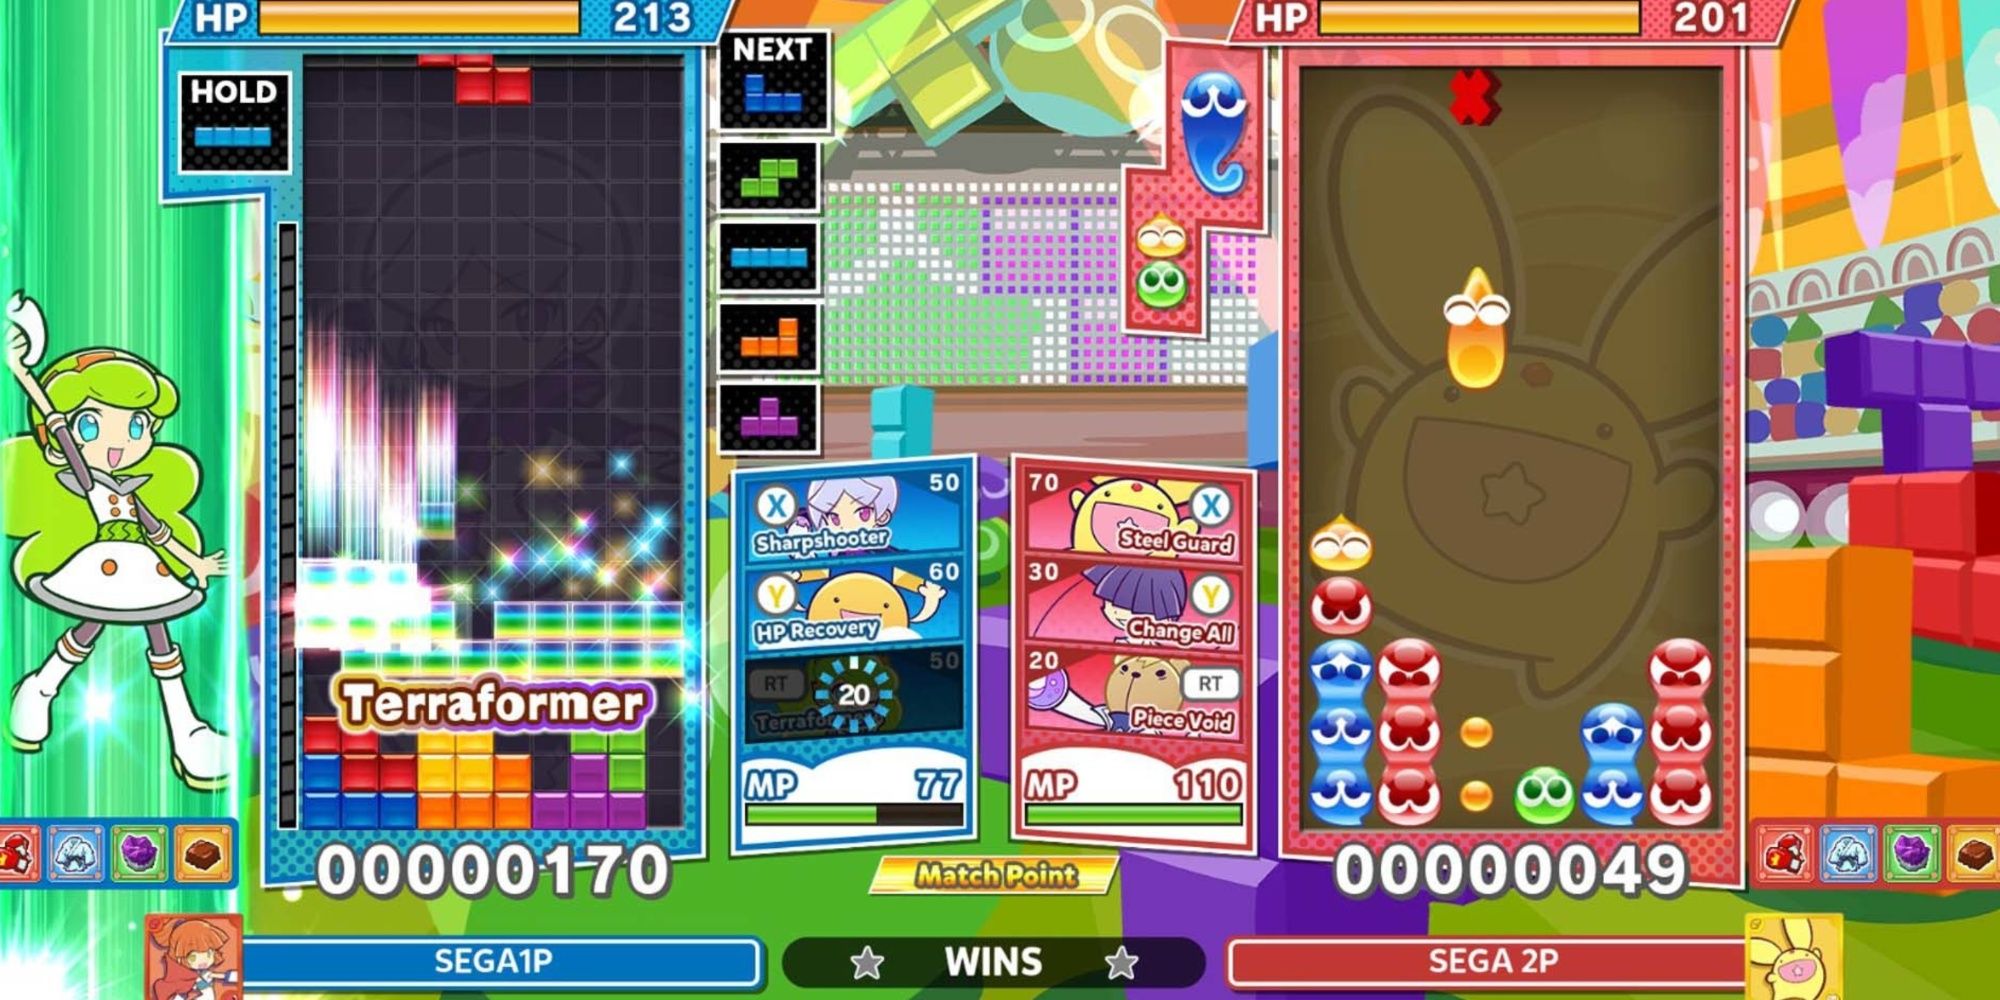 A Multiplayer match in Puyo Puyo Tetris 2